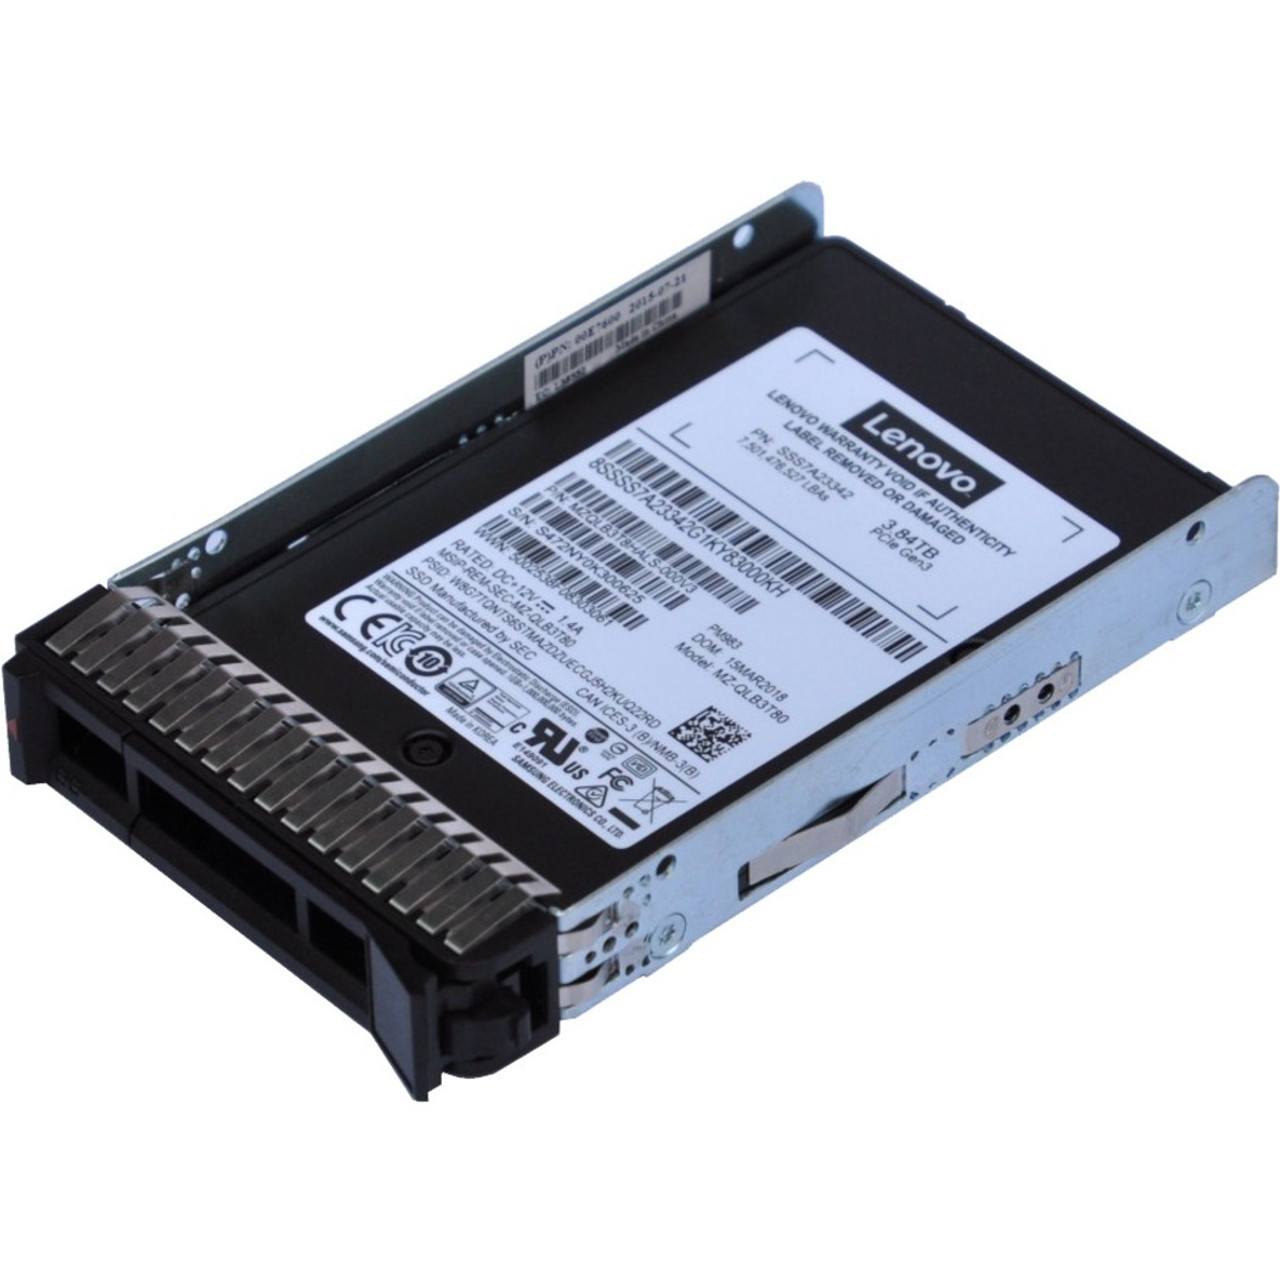 Lenovo PM983 960 GB Solid State Drive - Internal - PCI Express NVMe